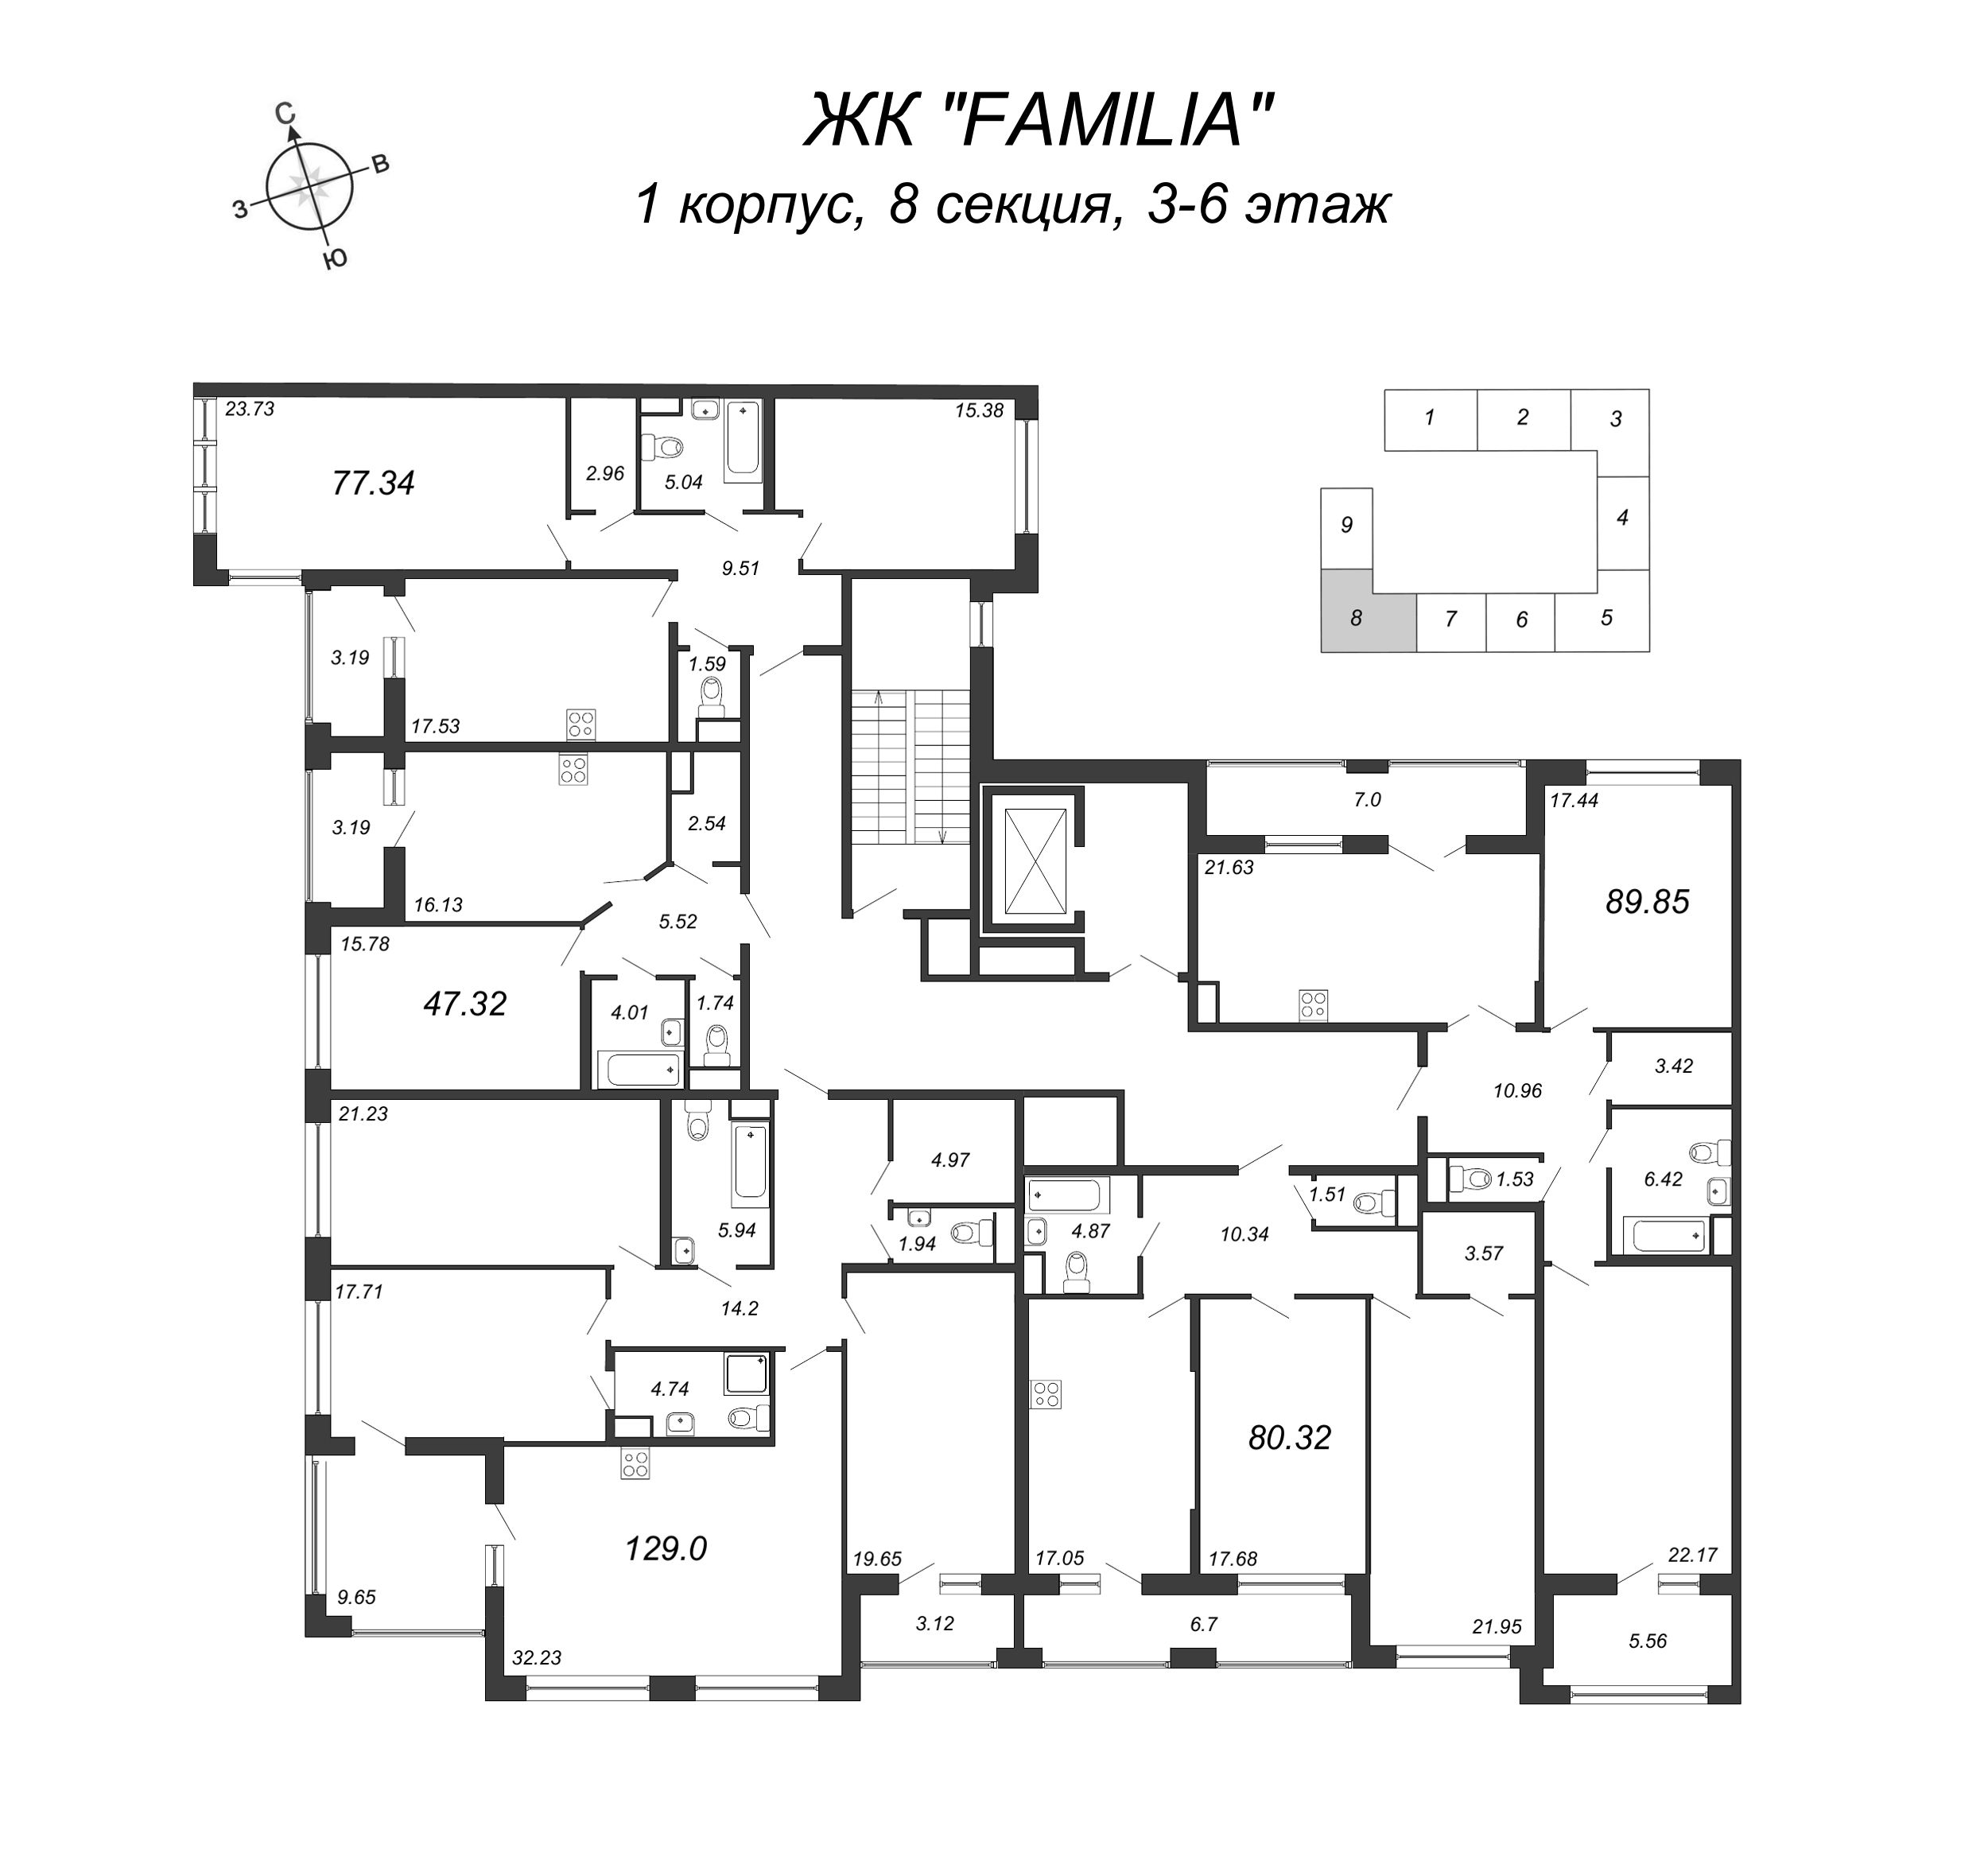 4-комнатная (Евро) квартира, 129 м² - планировка этажа